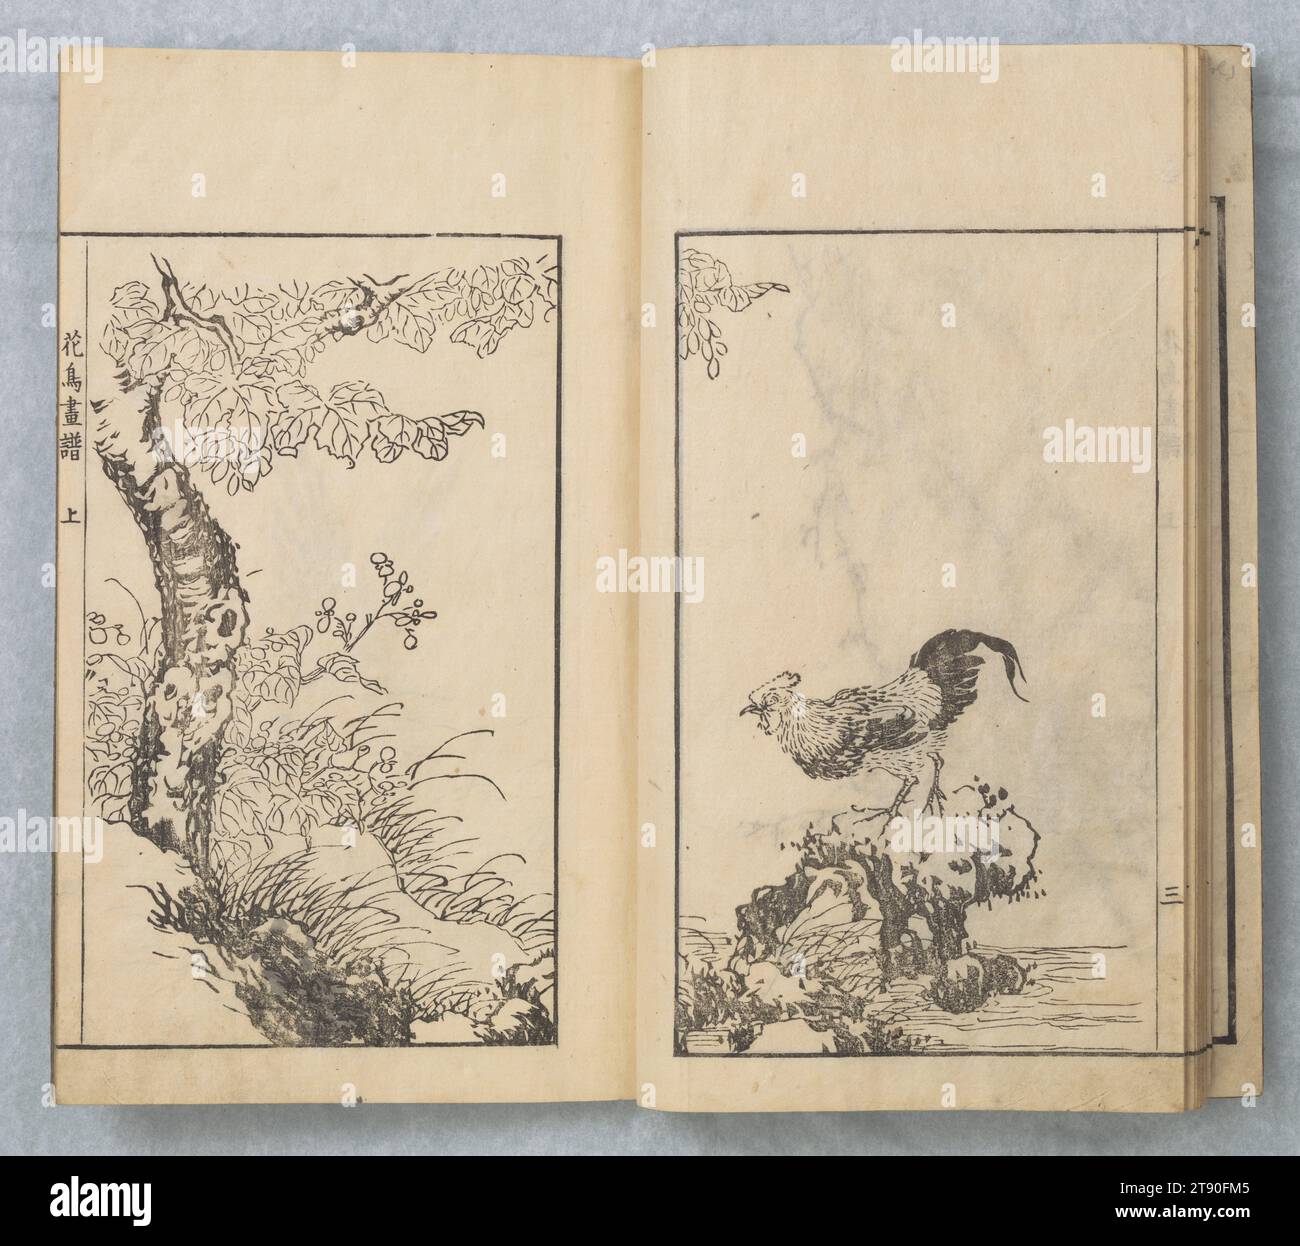 Gemälde von Sō Shiseki (Sō Shiseki gafu 宋紫石画譜), Band 1, 1765, 8. Mondmonat, Sō Shiseki, Japanisch, 1715 - 1786, 10 5/8 x 6 1/2 x 5/16 Zoll (26,99 x 16,51 x 0,79 cm), Holzblock-gedrucktes Buch; Tinte und Farbe auf Papier, Japan, 18. Jahrhundert Stockfoto